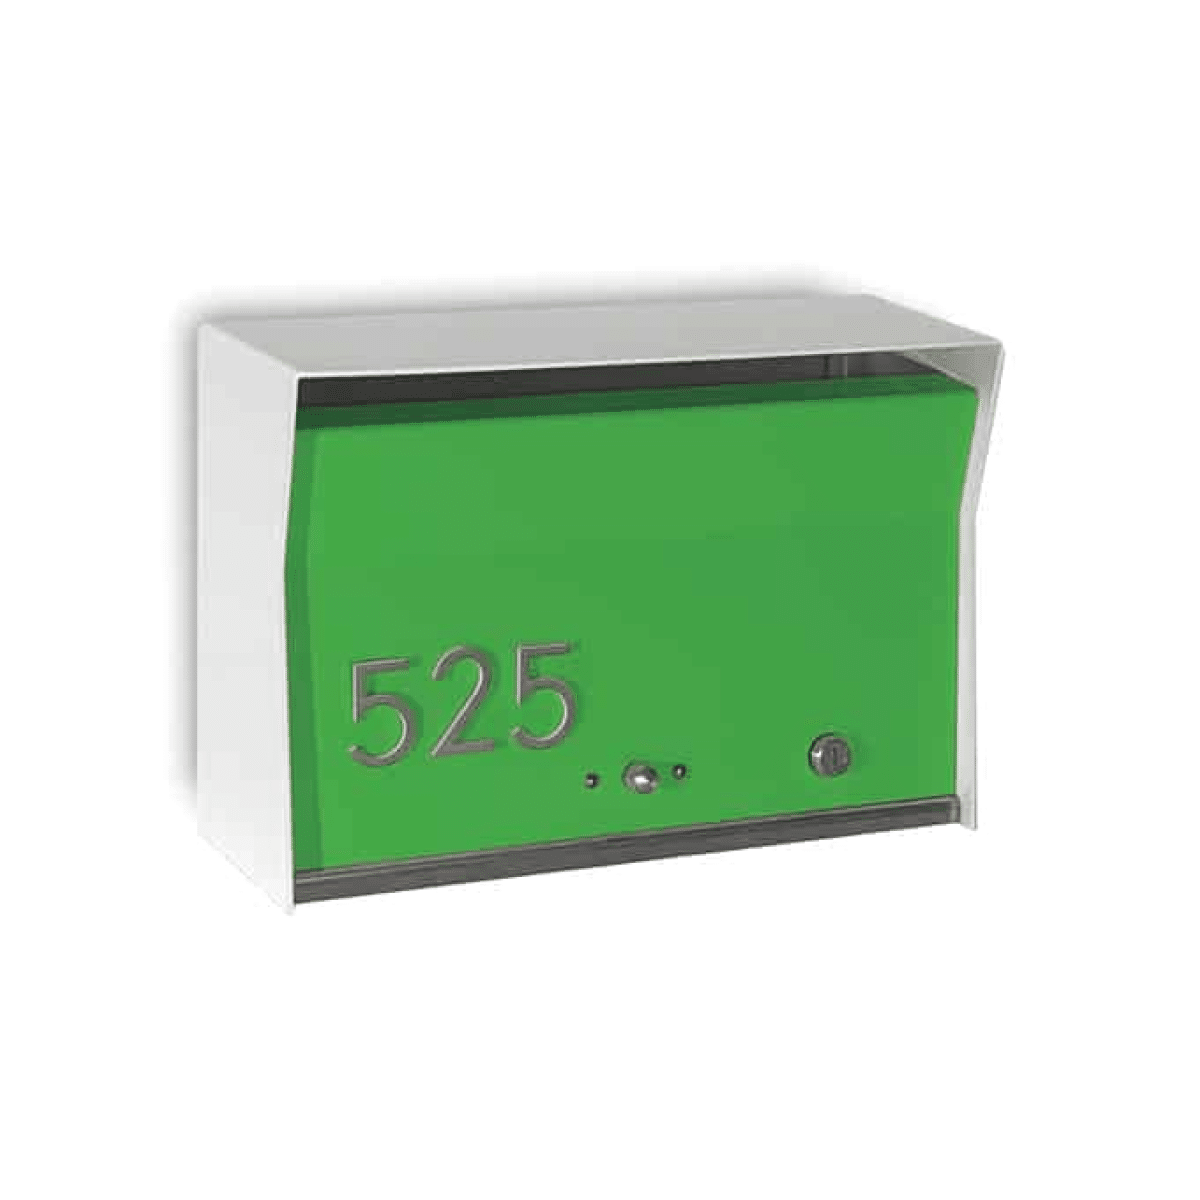 RetroBox Locking Wall Mount Mailbox in White Product Image